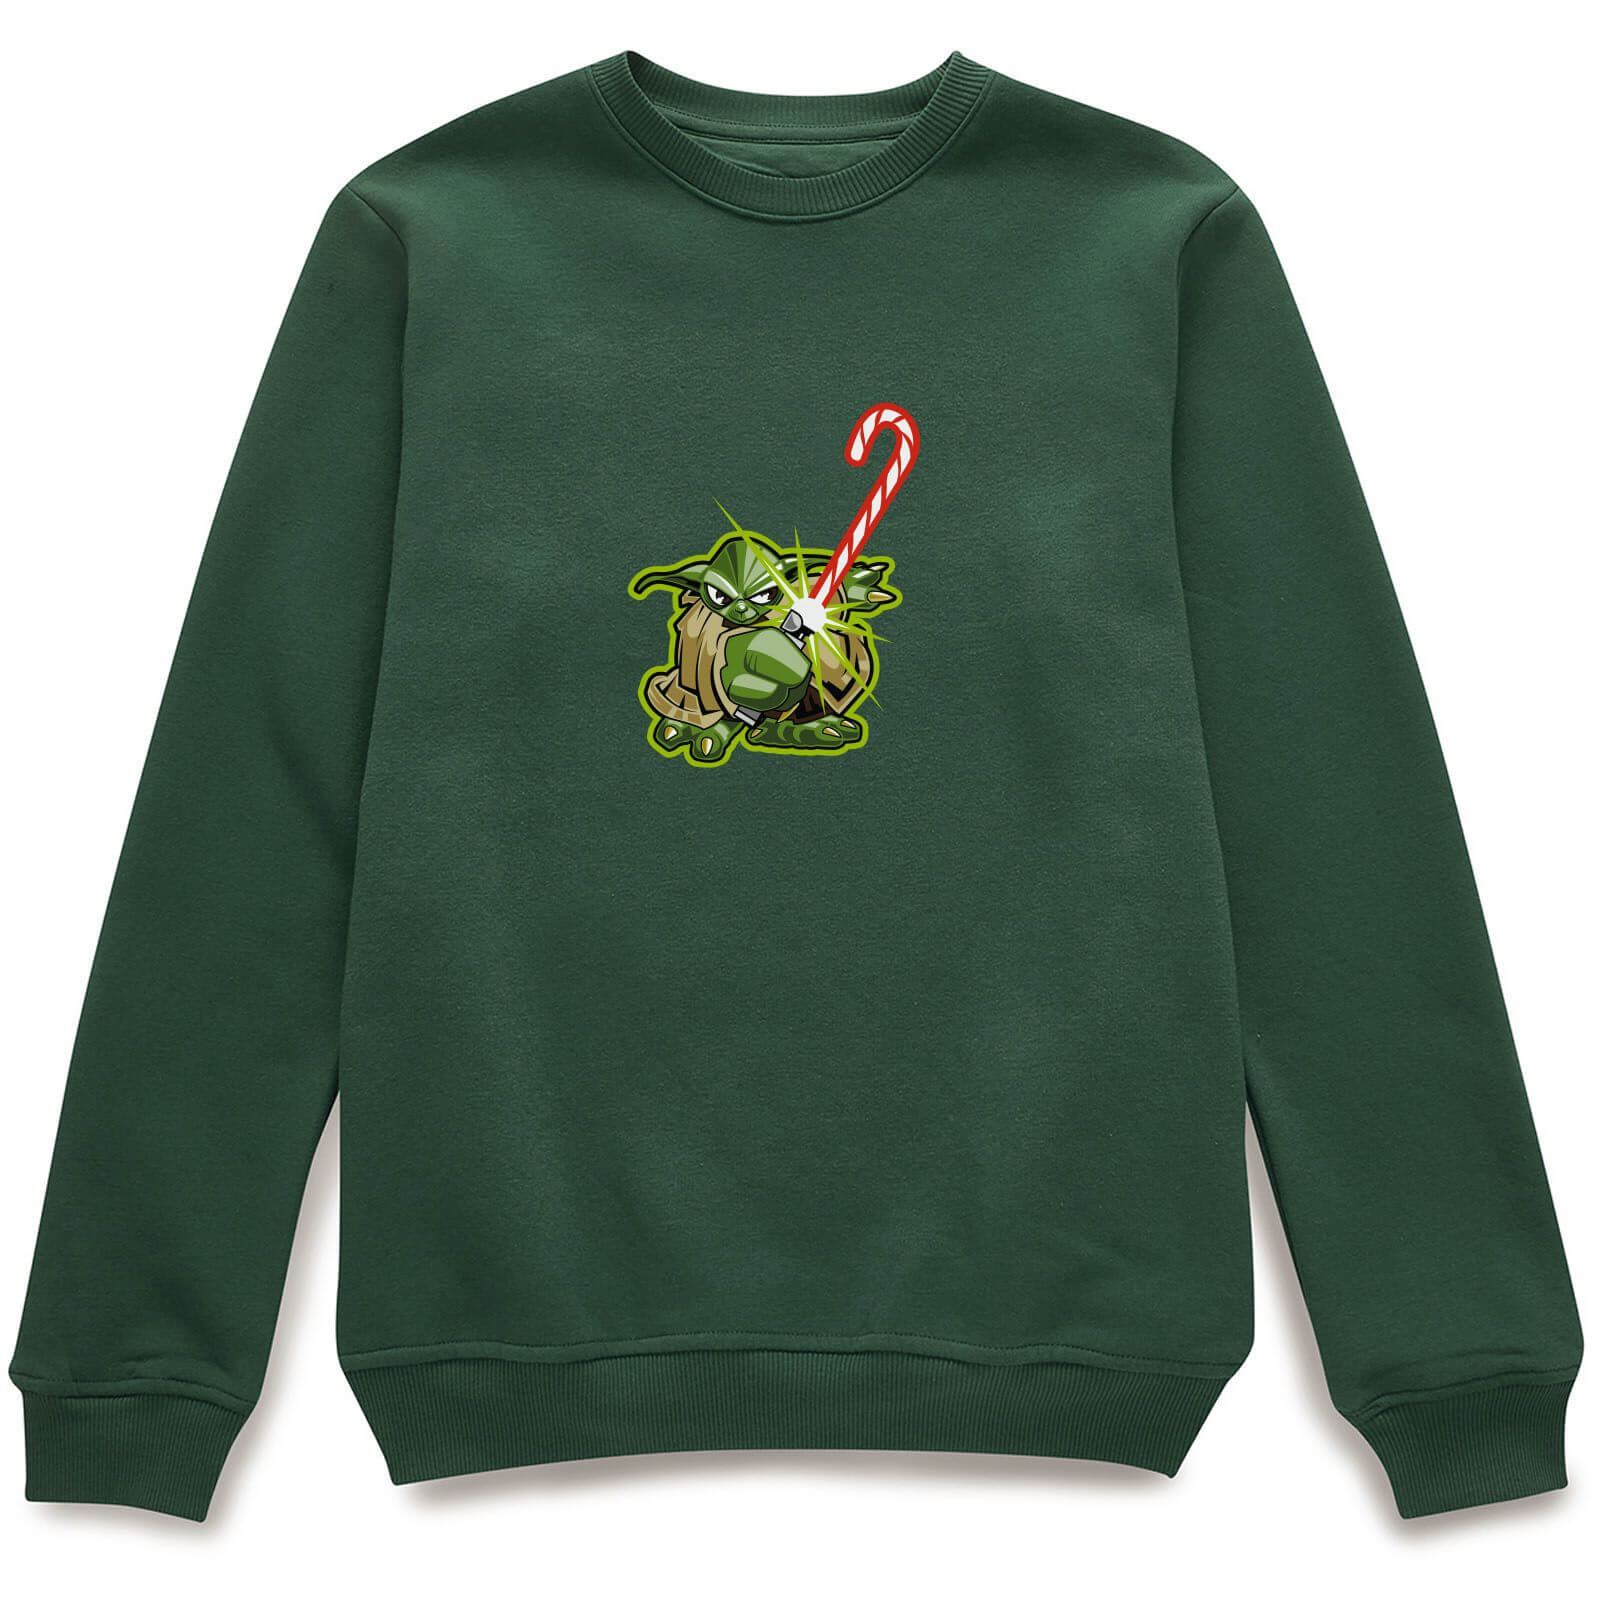 Star Wars Candy Cane Yoda Green Christmas Sweatshirt - XXL - Green